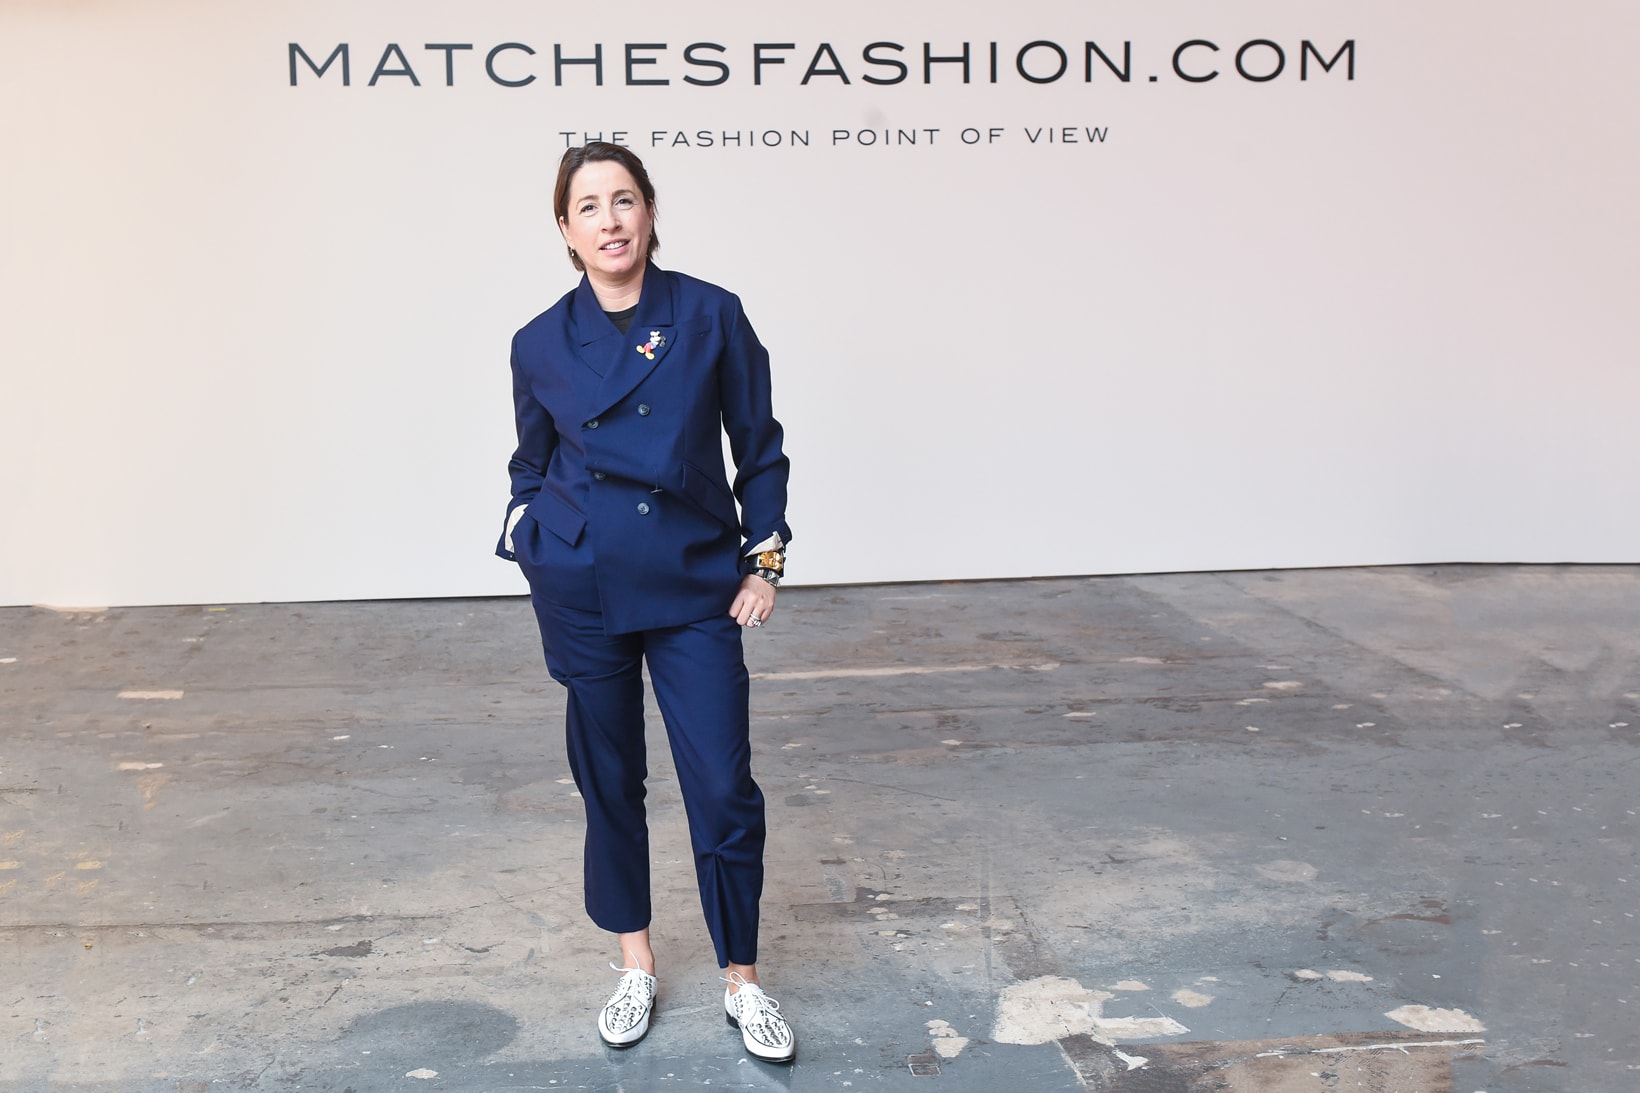 Natalie Kingham MATCHEFASHION Fashion Buying Director